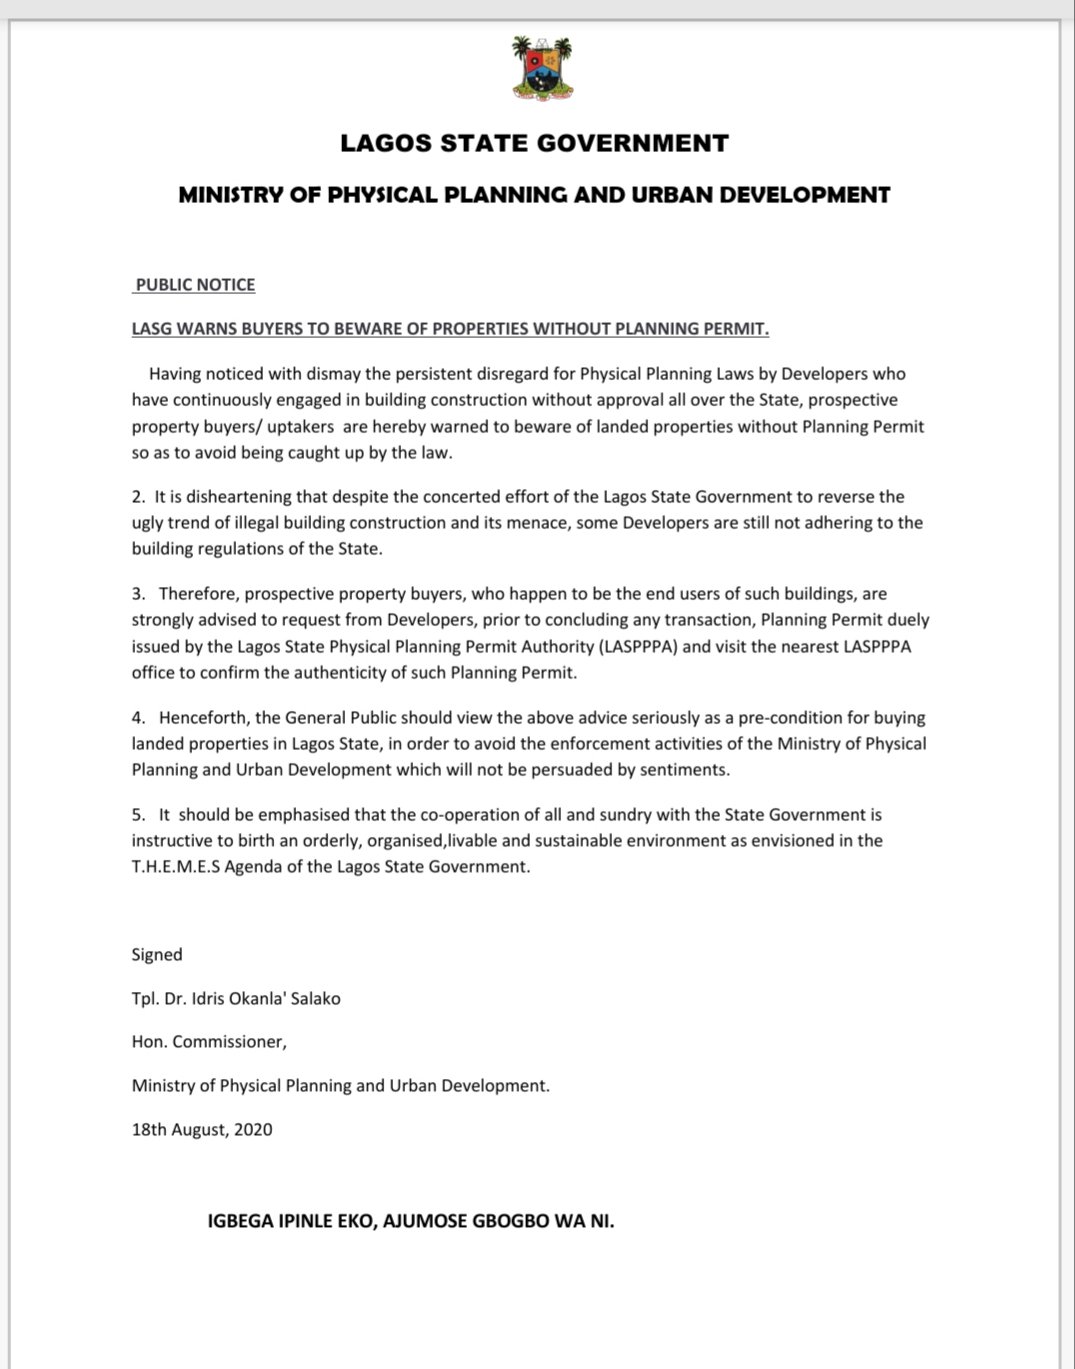 Puplic Notice on building plan permit in Lagos State